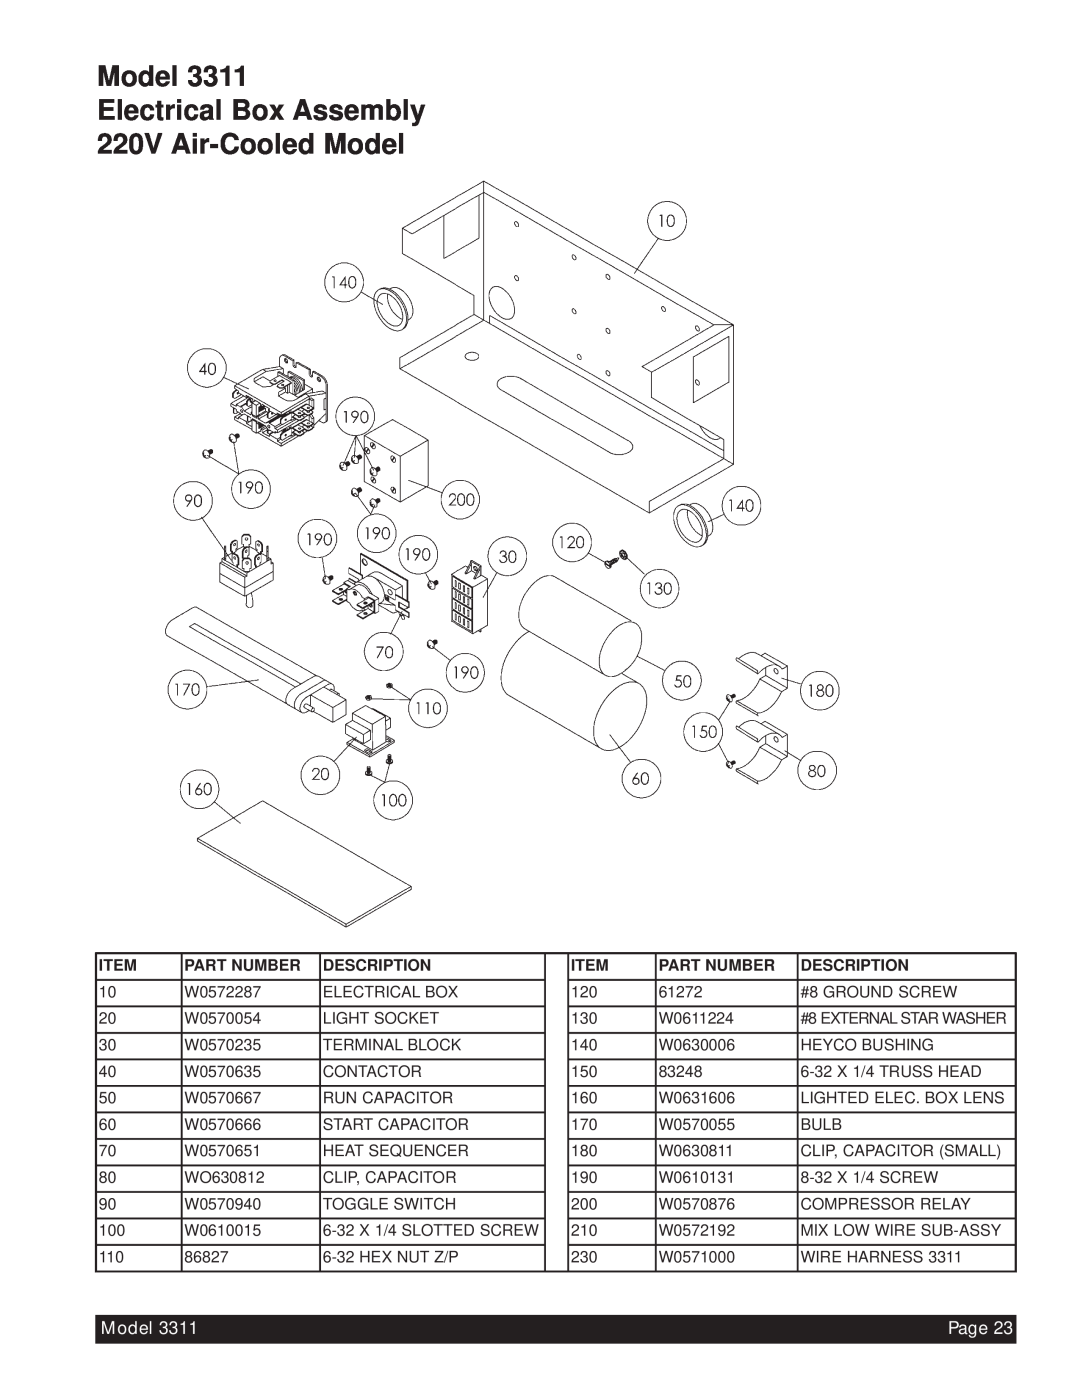 Beverage-Air 3311 manual 220V Air-CooledModel, Model Electrical Box Assembly, Page, Part Number, Description 